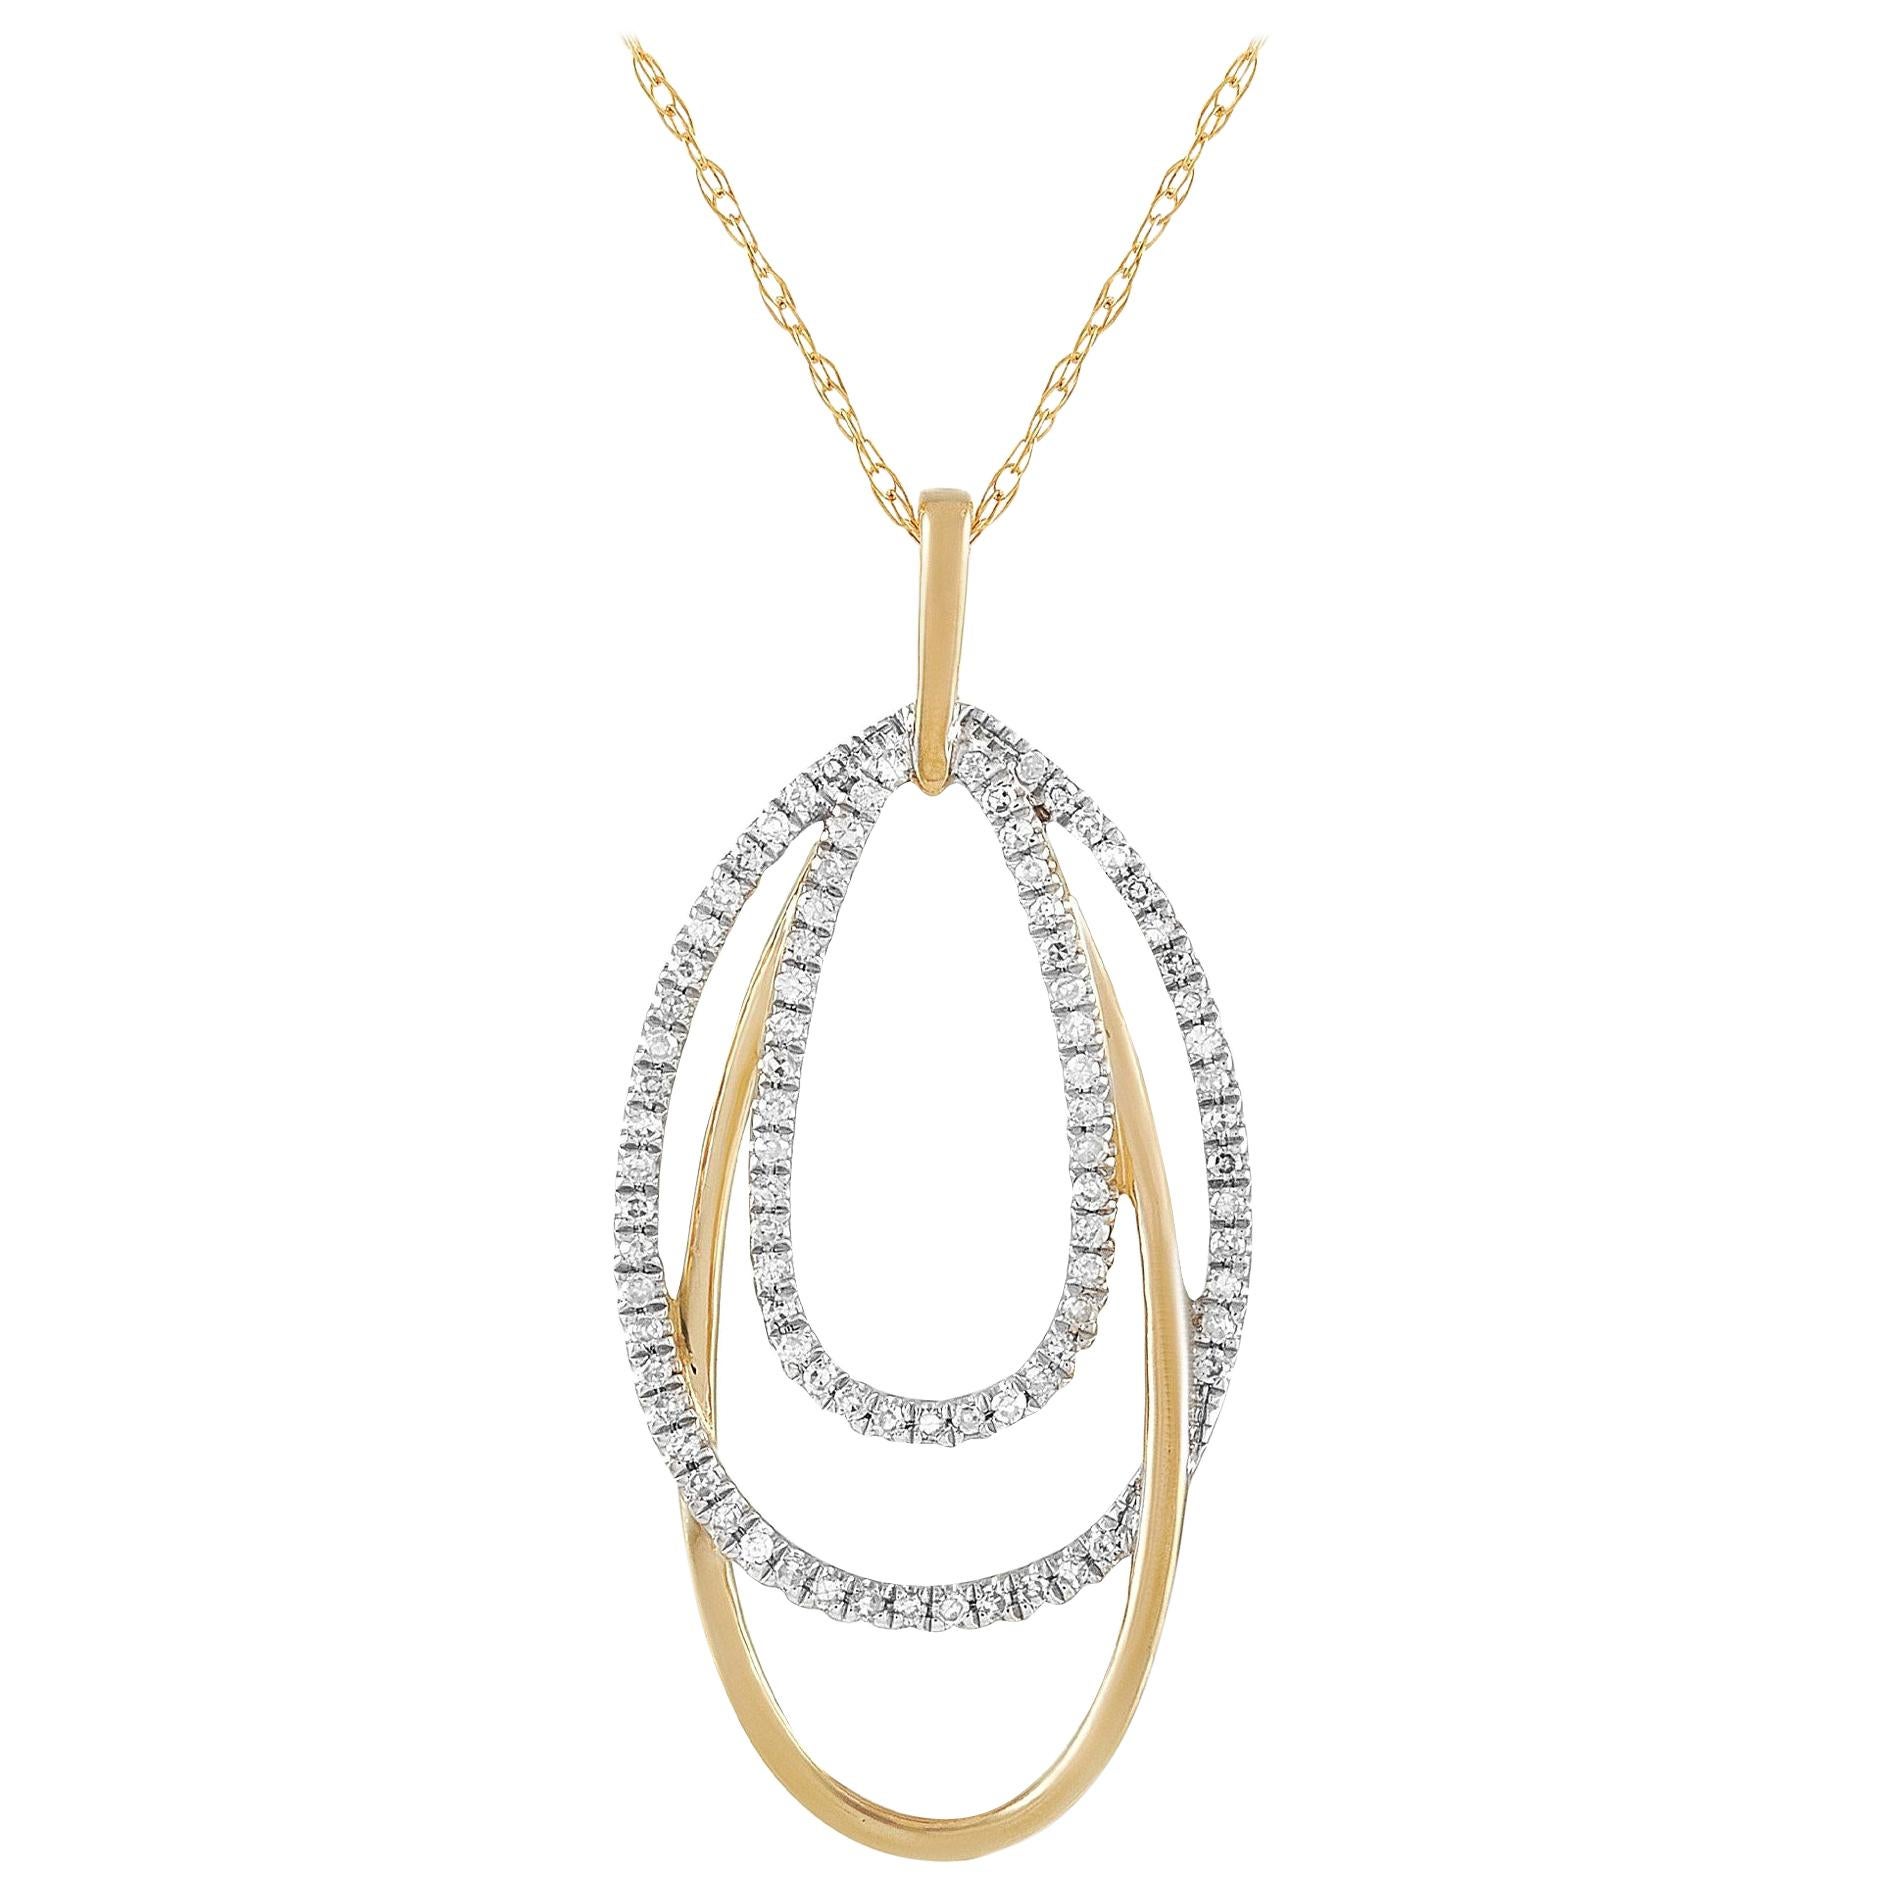 LB Exclusive 14 Karat Gold 0.17 Carat Diamond Layered Oval Pendant Necklace